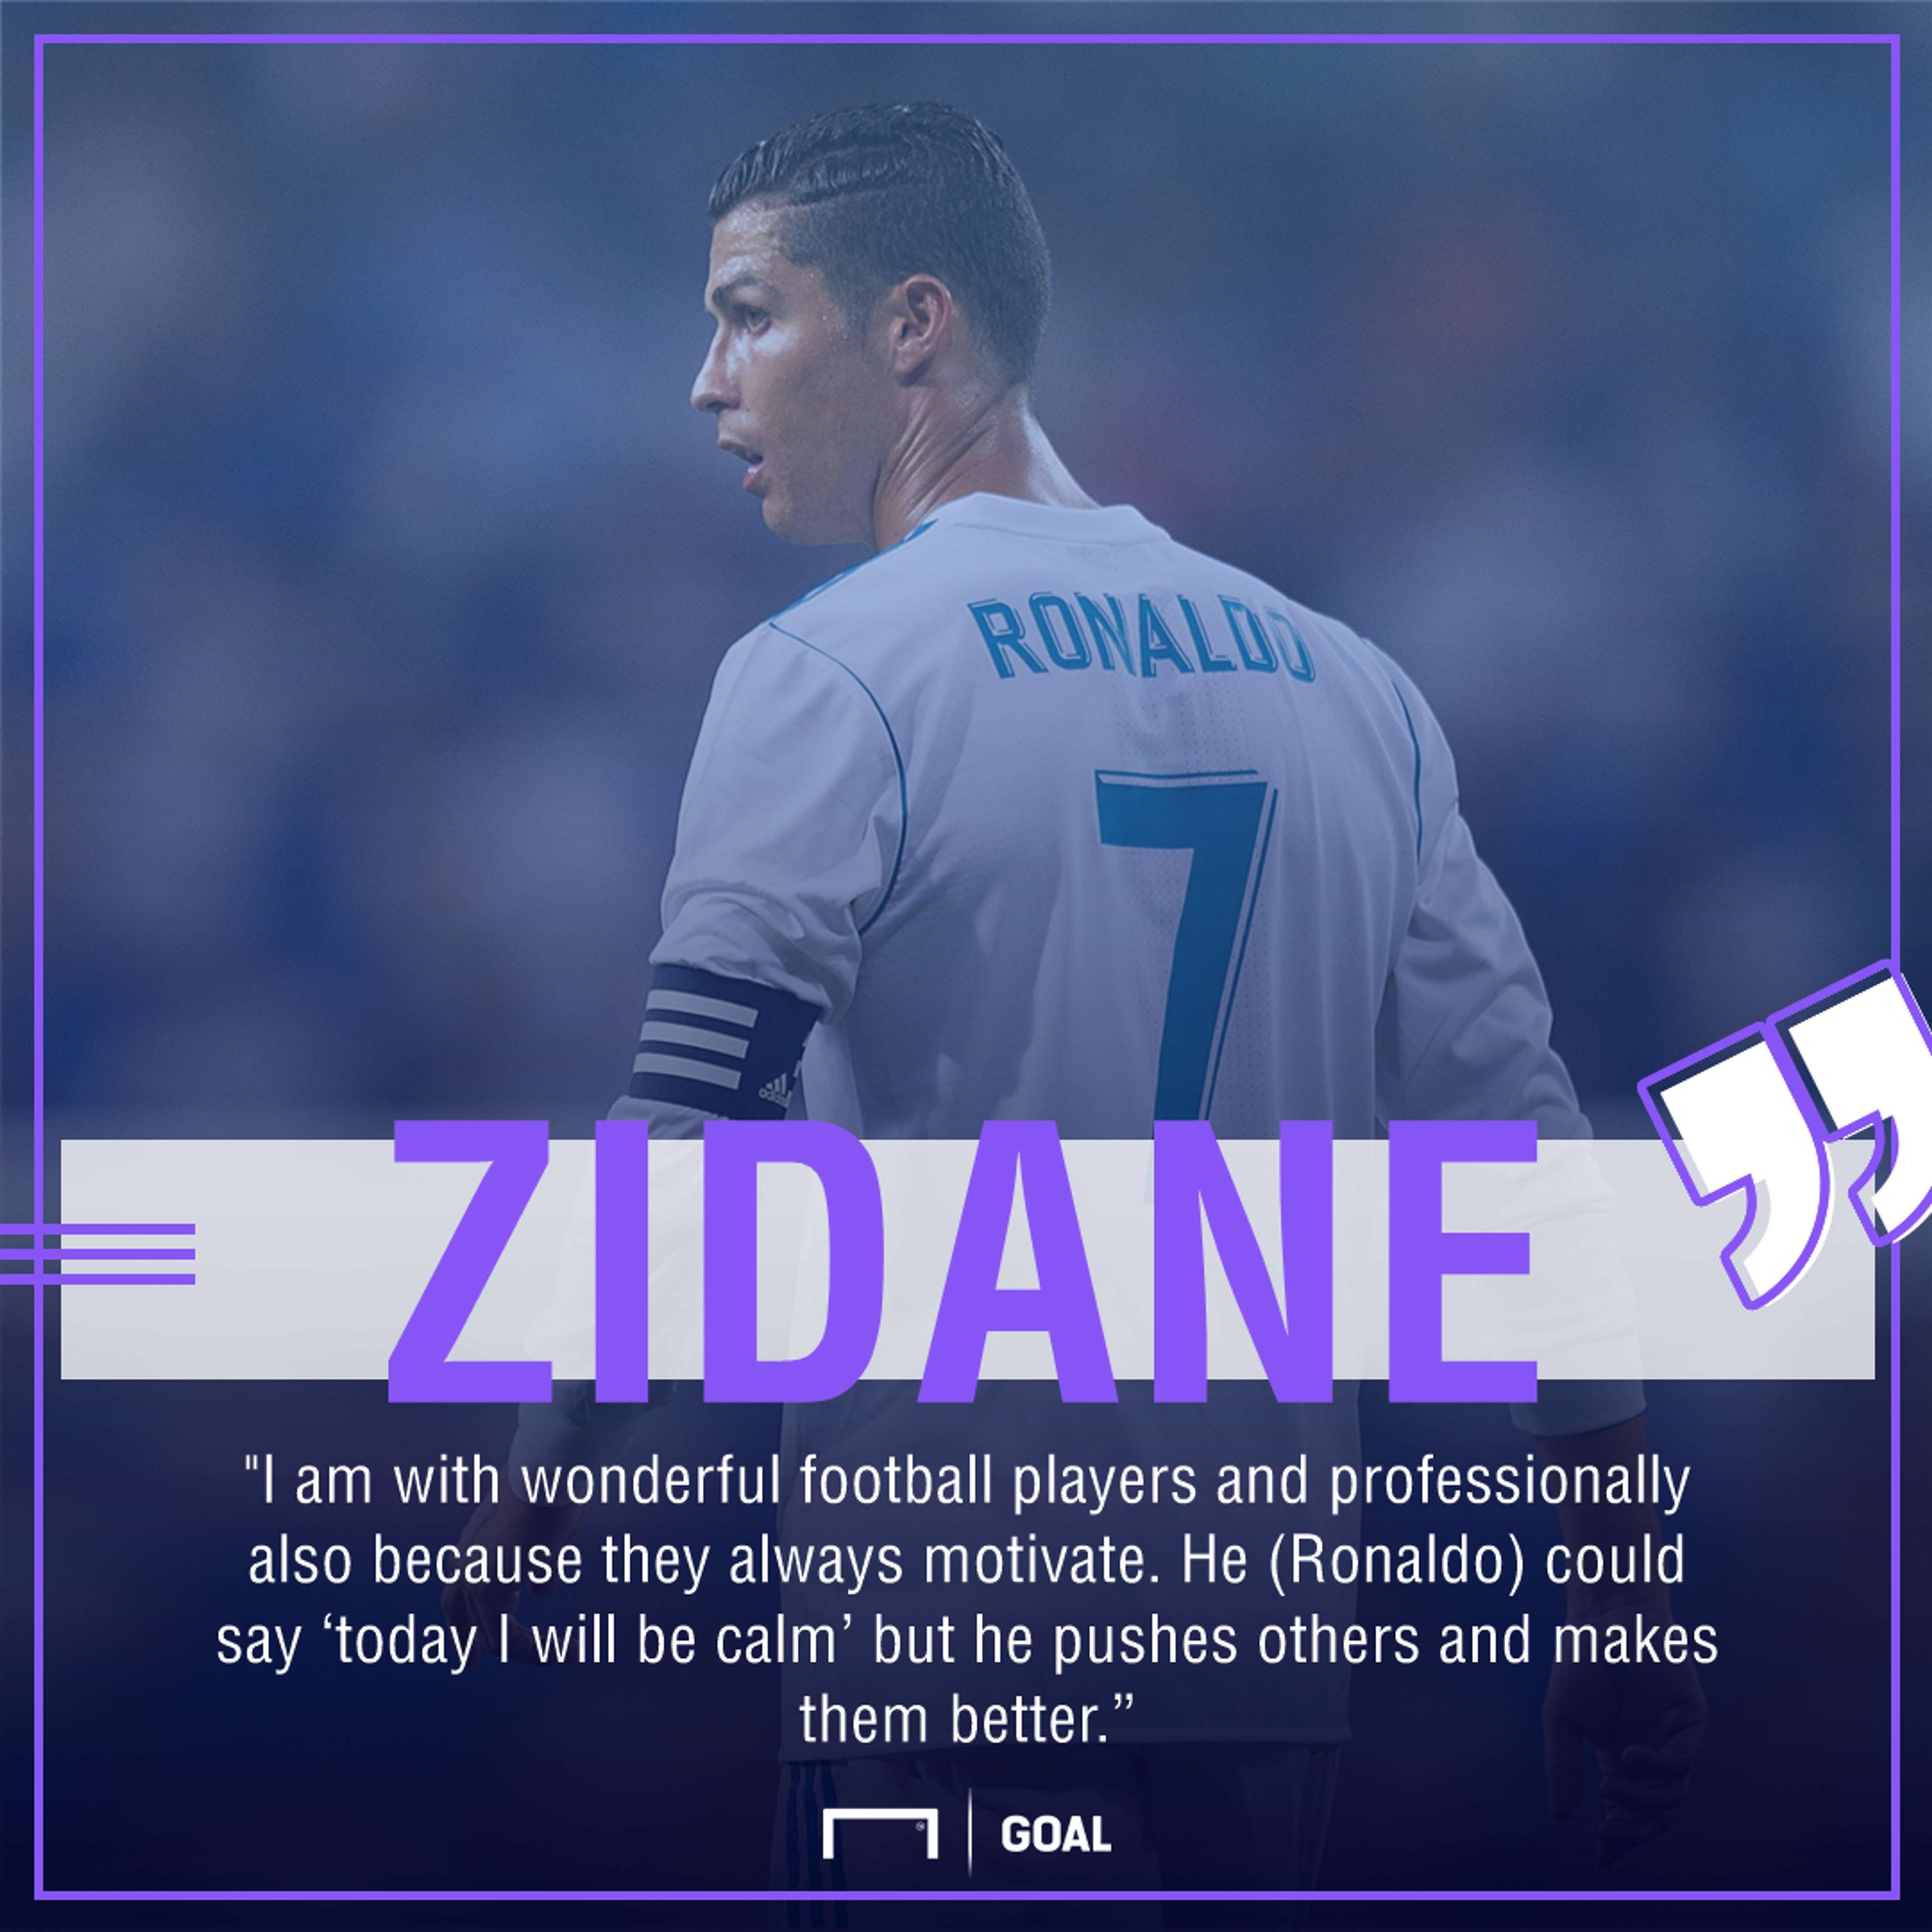 Zidane Ronaldo quote gfx